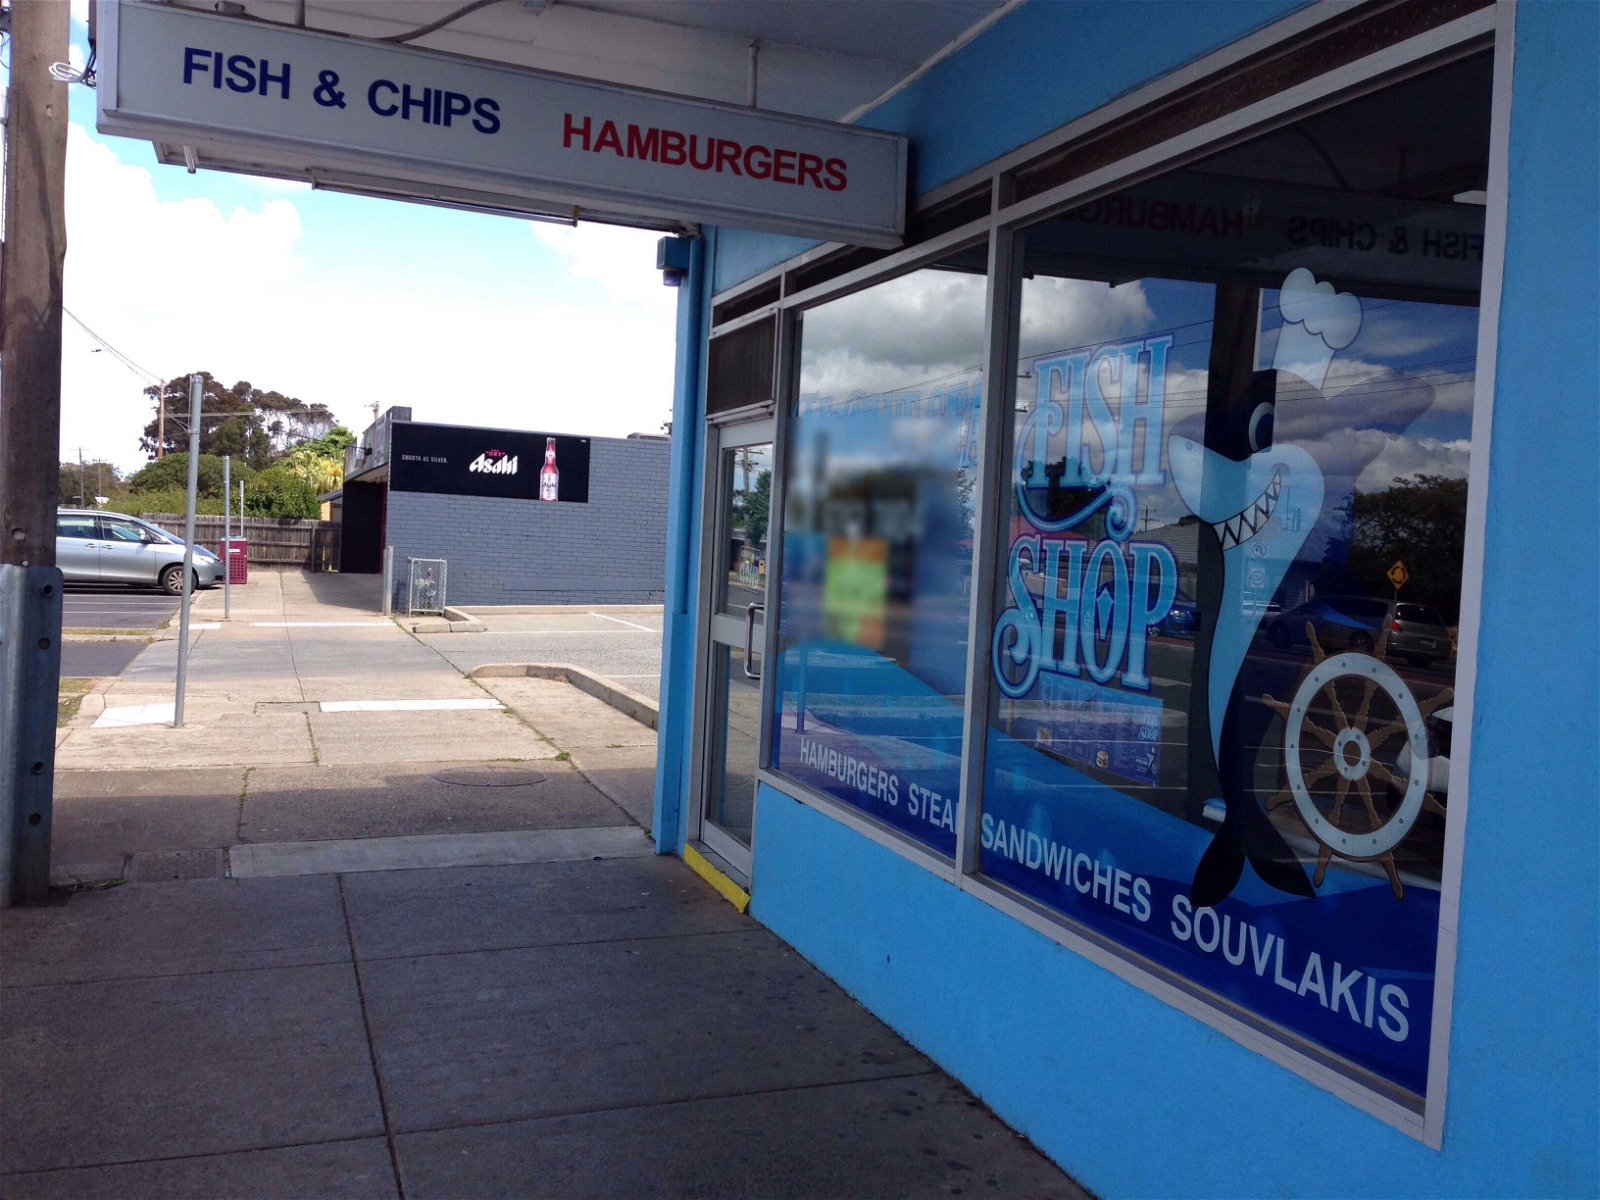 T.J's Blue Sea Fish Shop